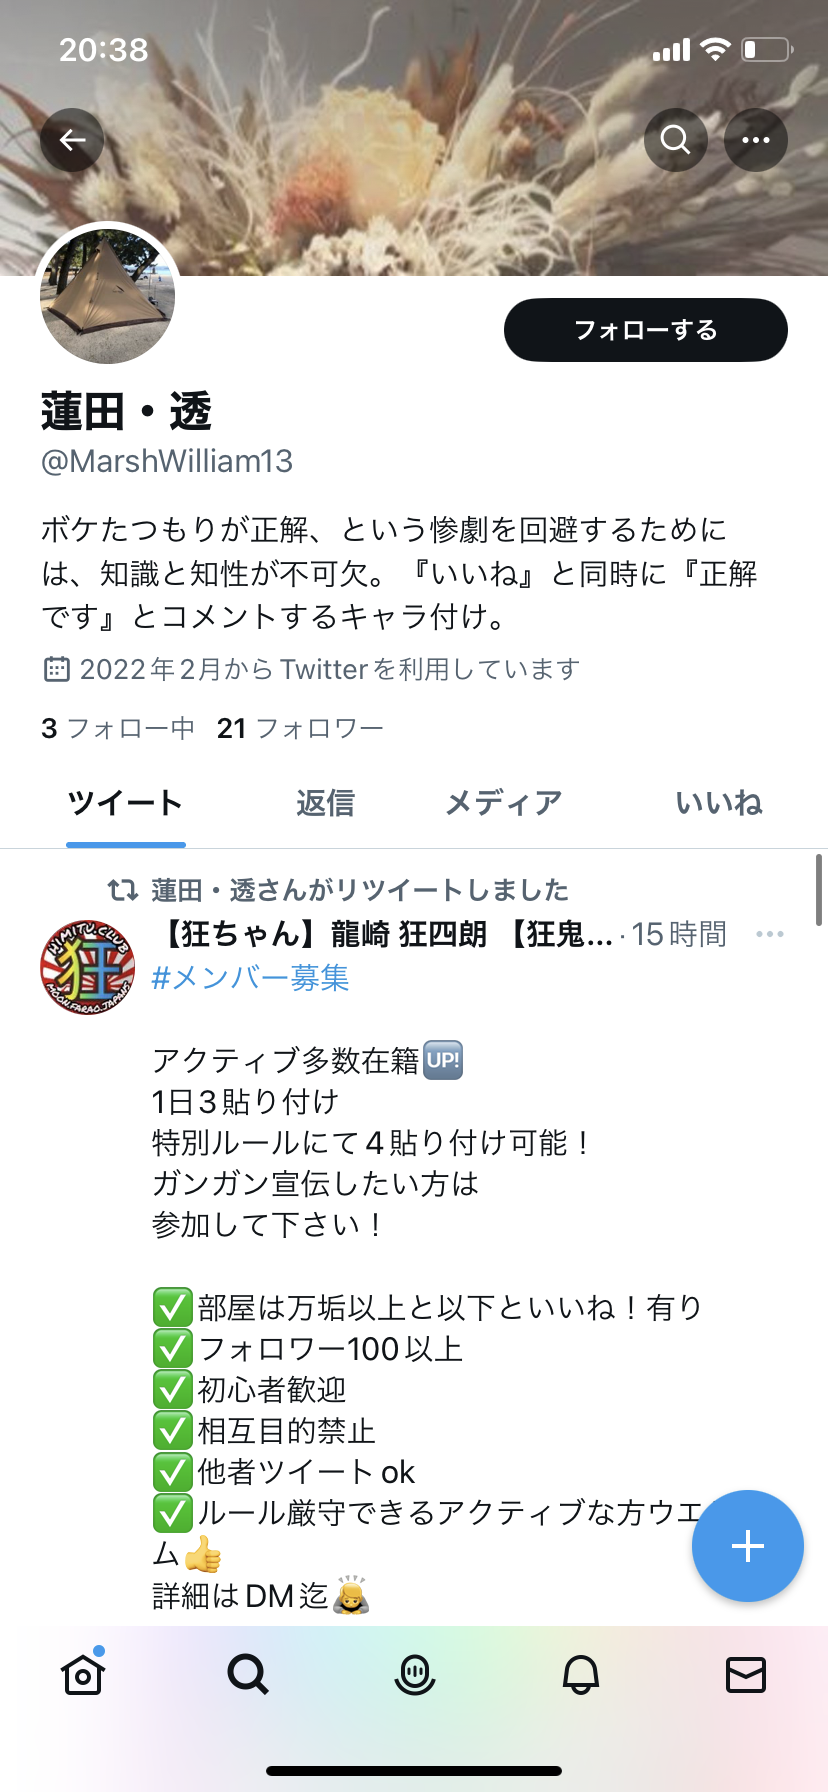 Twitter Japanese Retweet